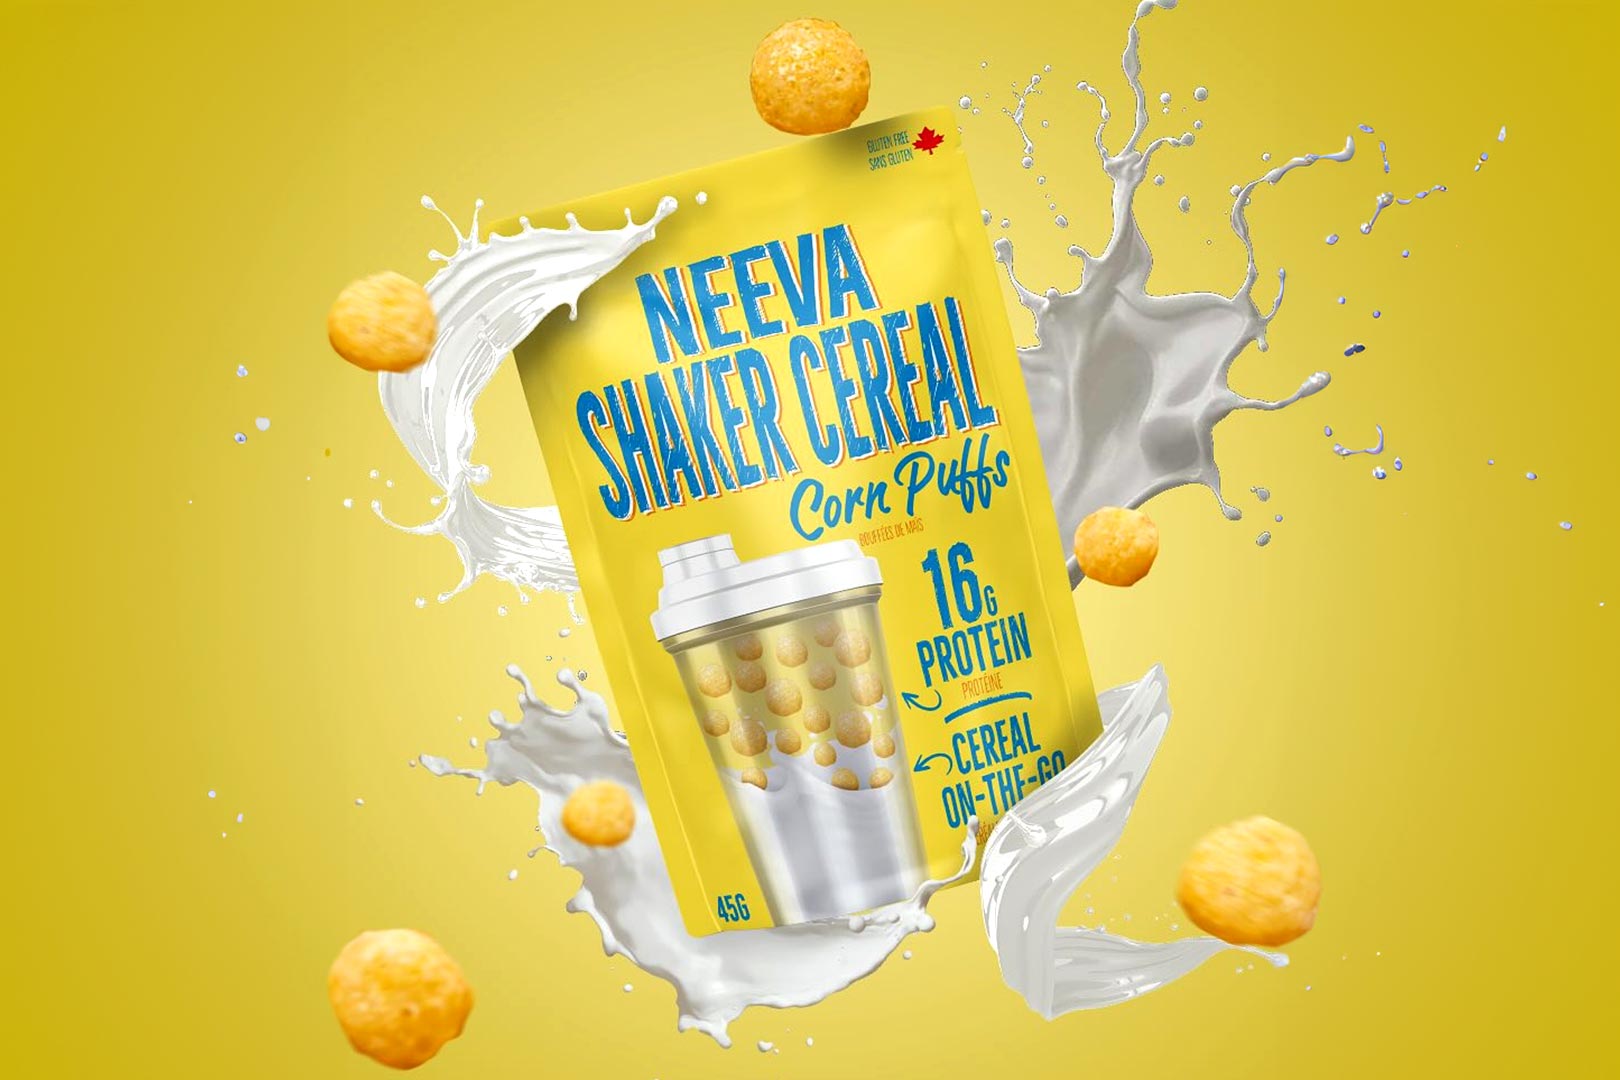 Corn Puffs Neeva Shaker Cereal